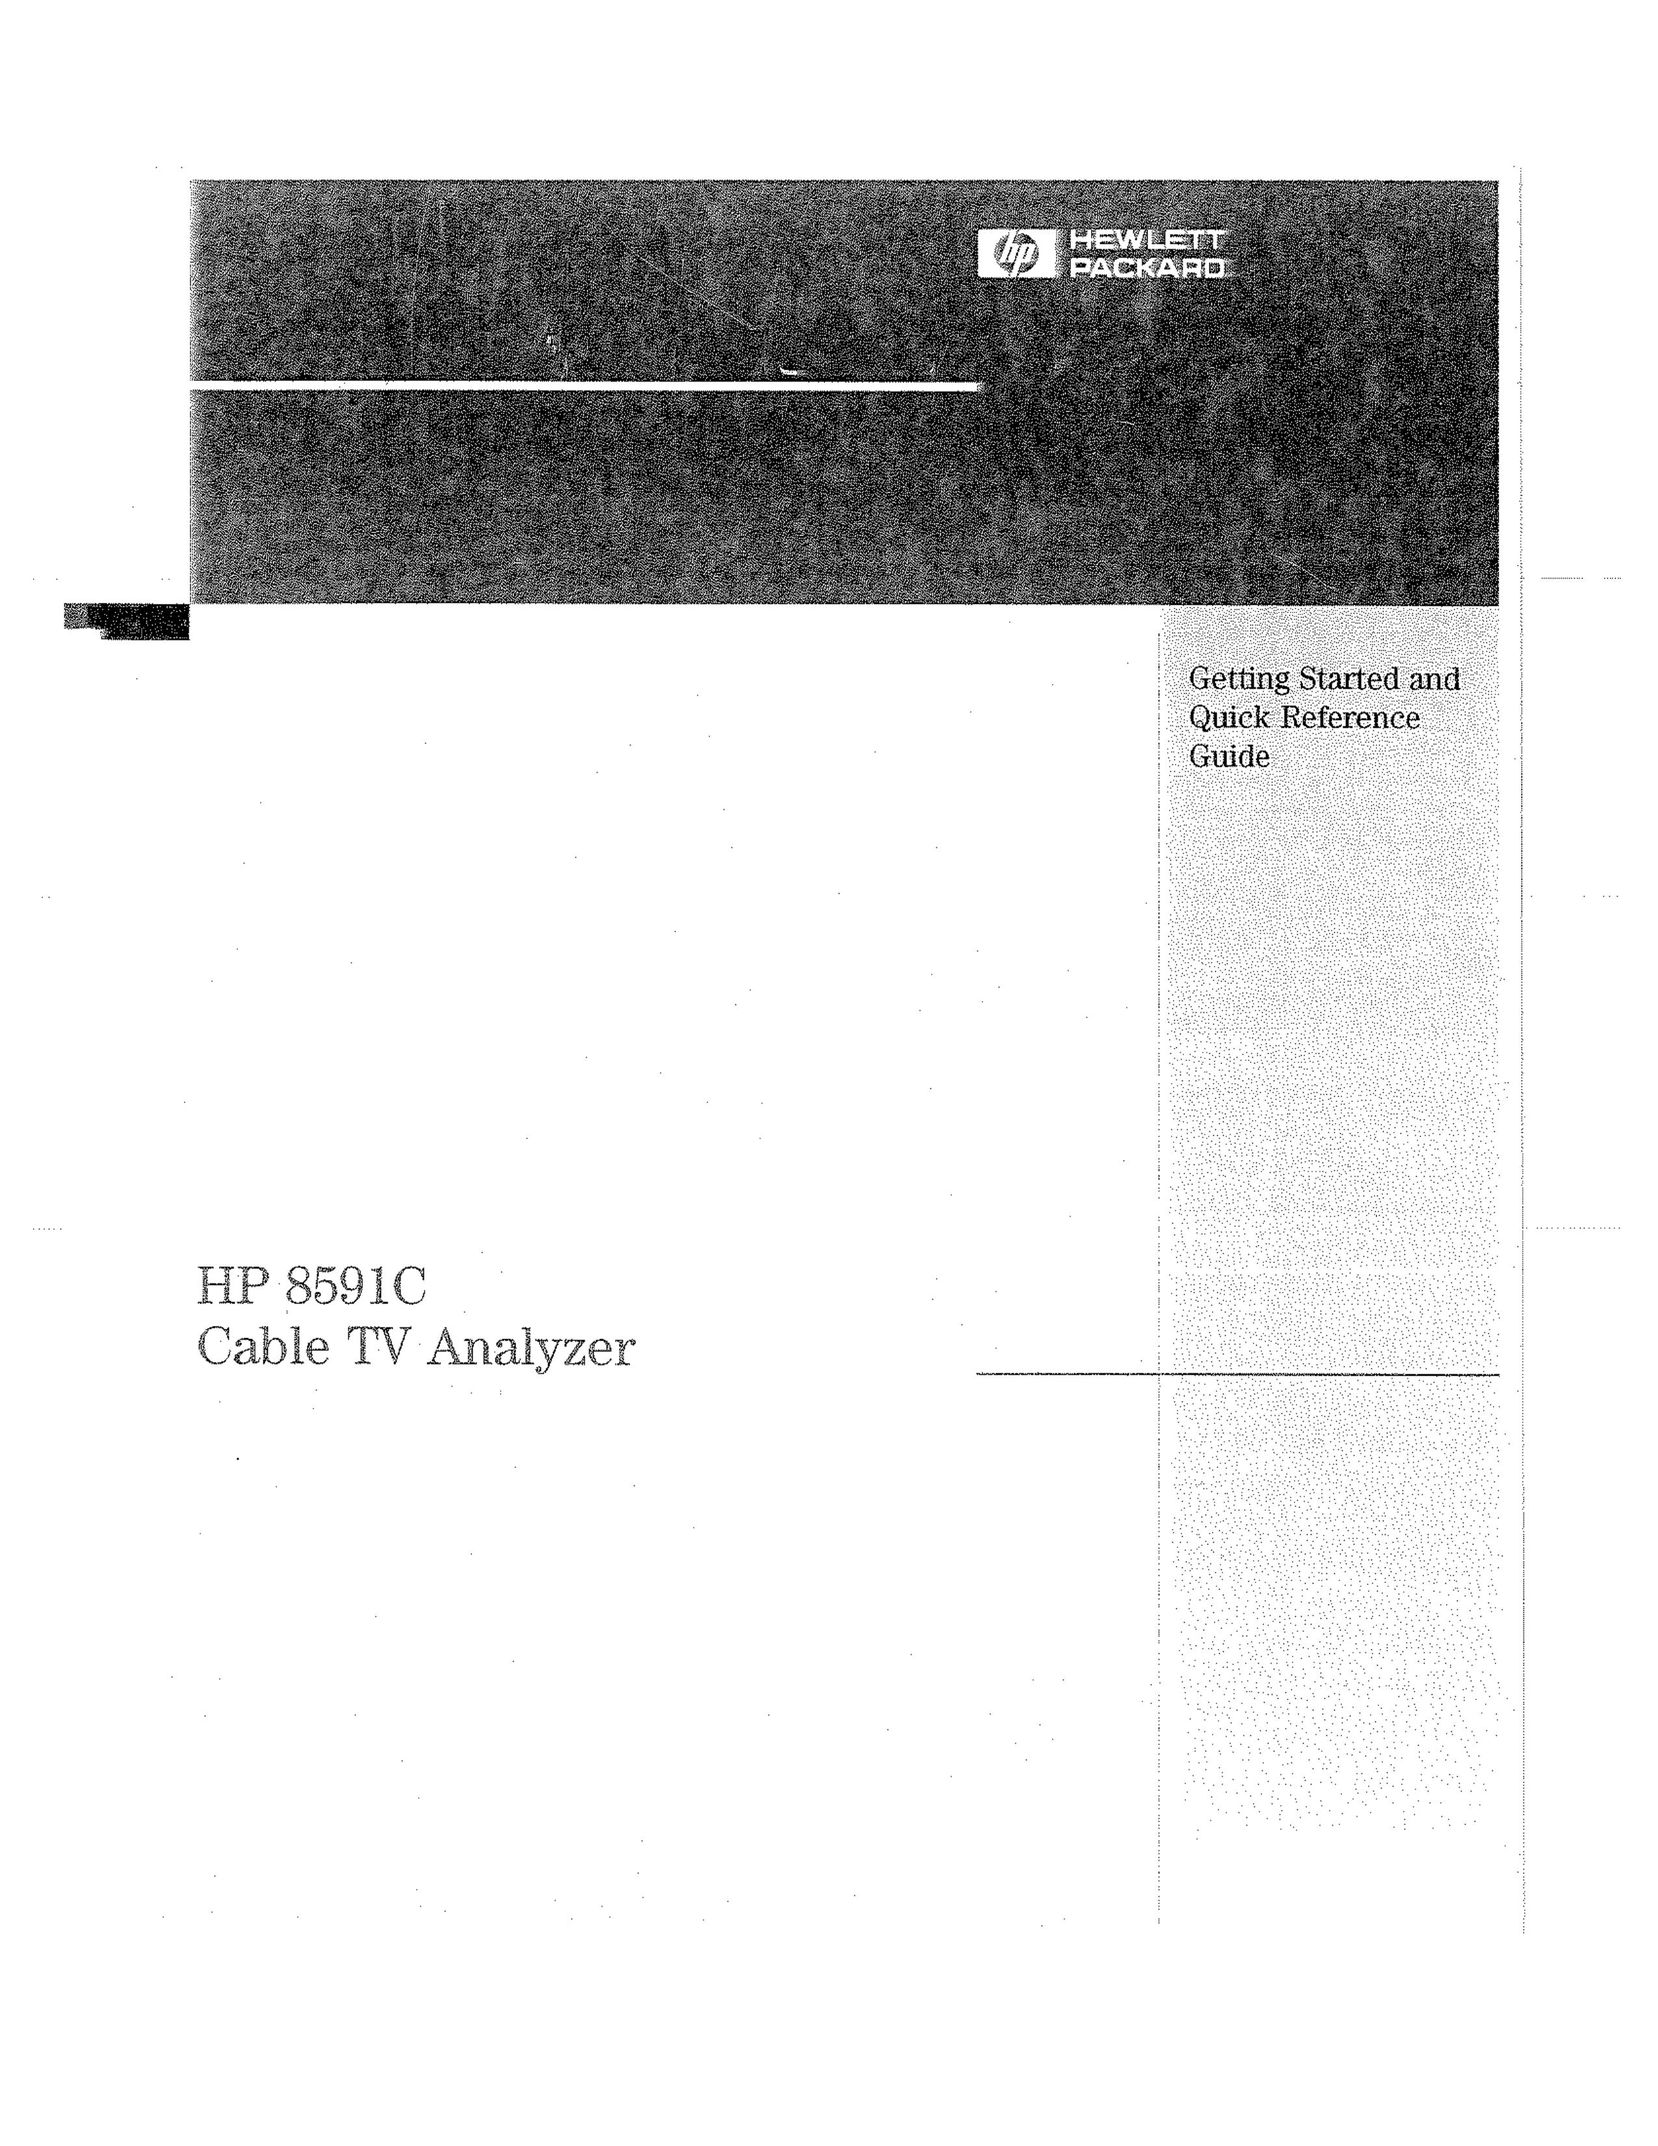 HP (Hewlett-Packard) HP 8591C Cable Box User Manual